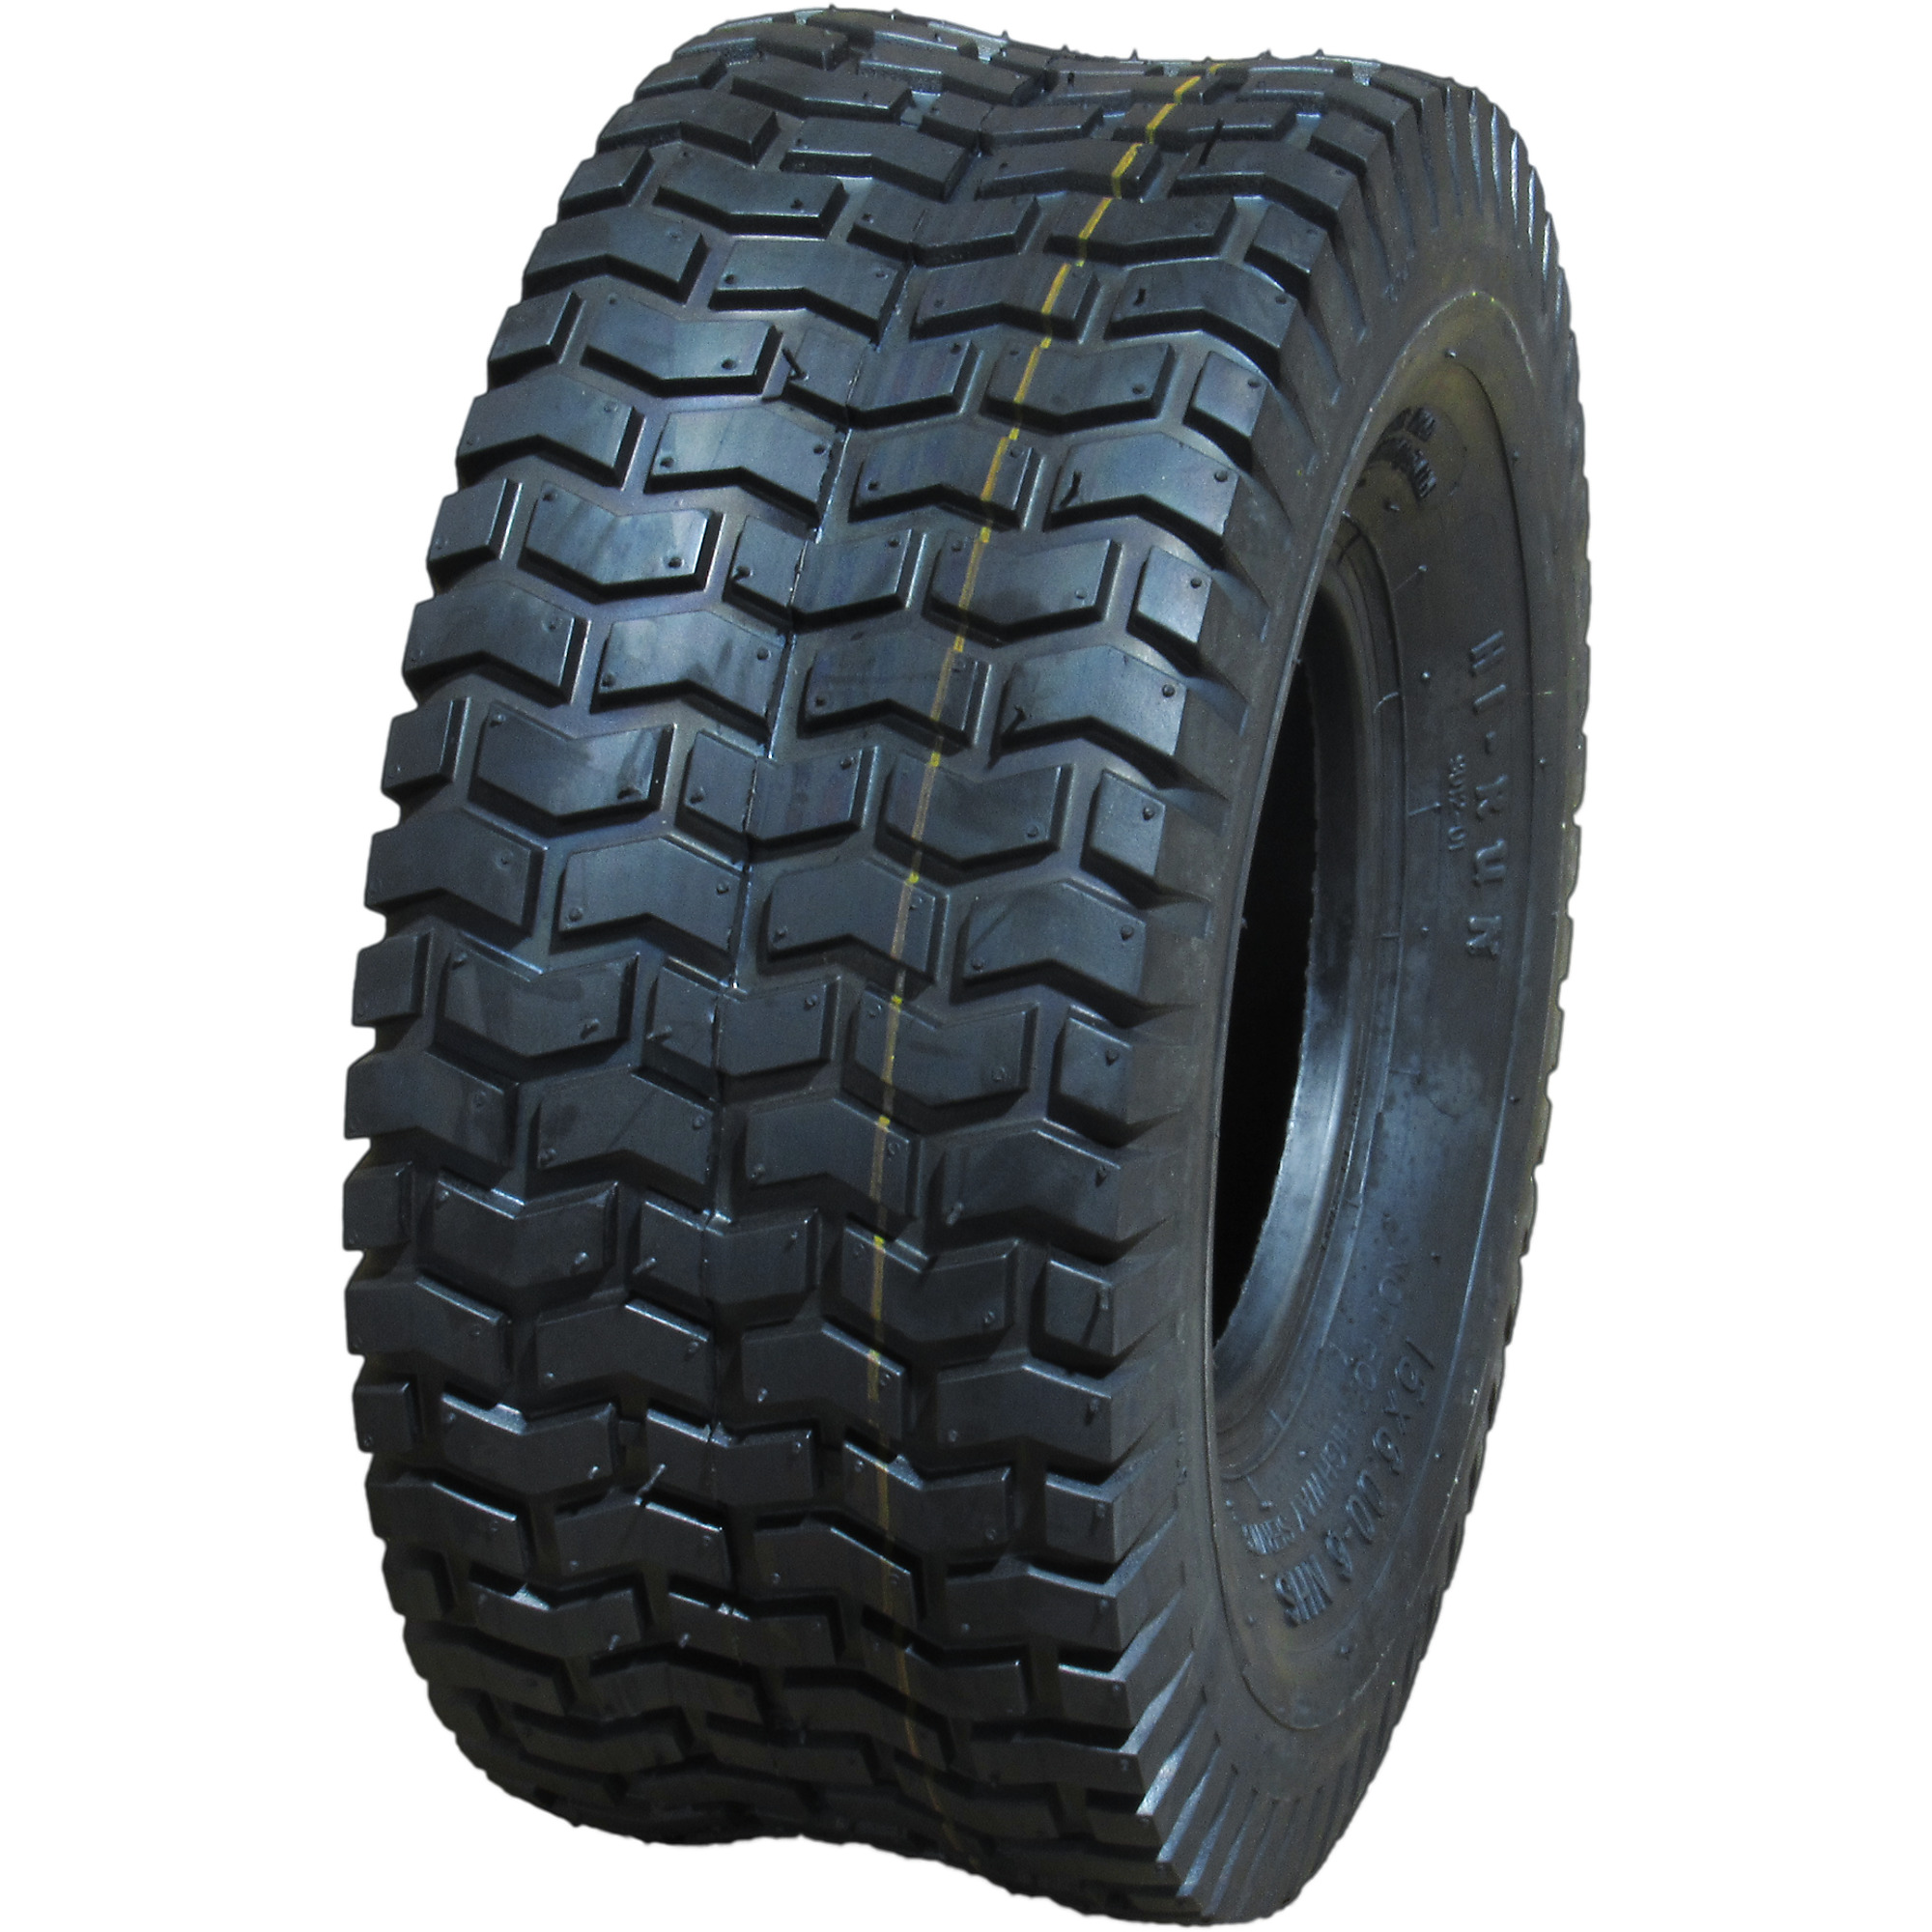 HI-RUN, Lawn Garden Tire, SU12 Turf II, Tire Size 18X9.50-8 Load Range Rating C, Model WD1281